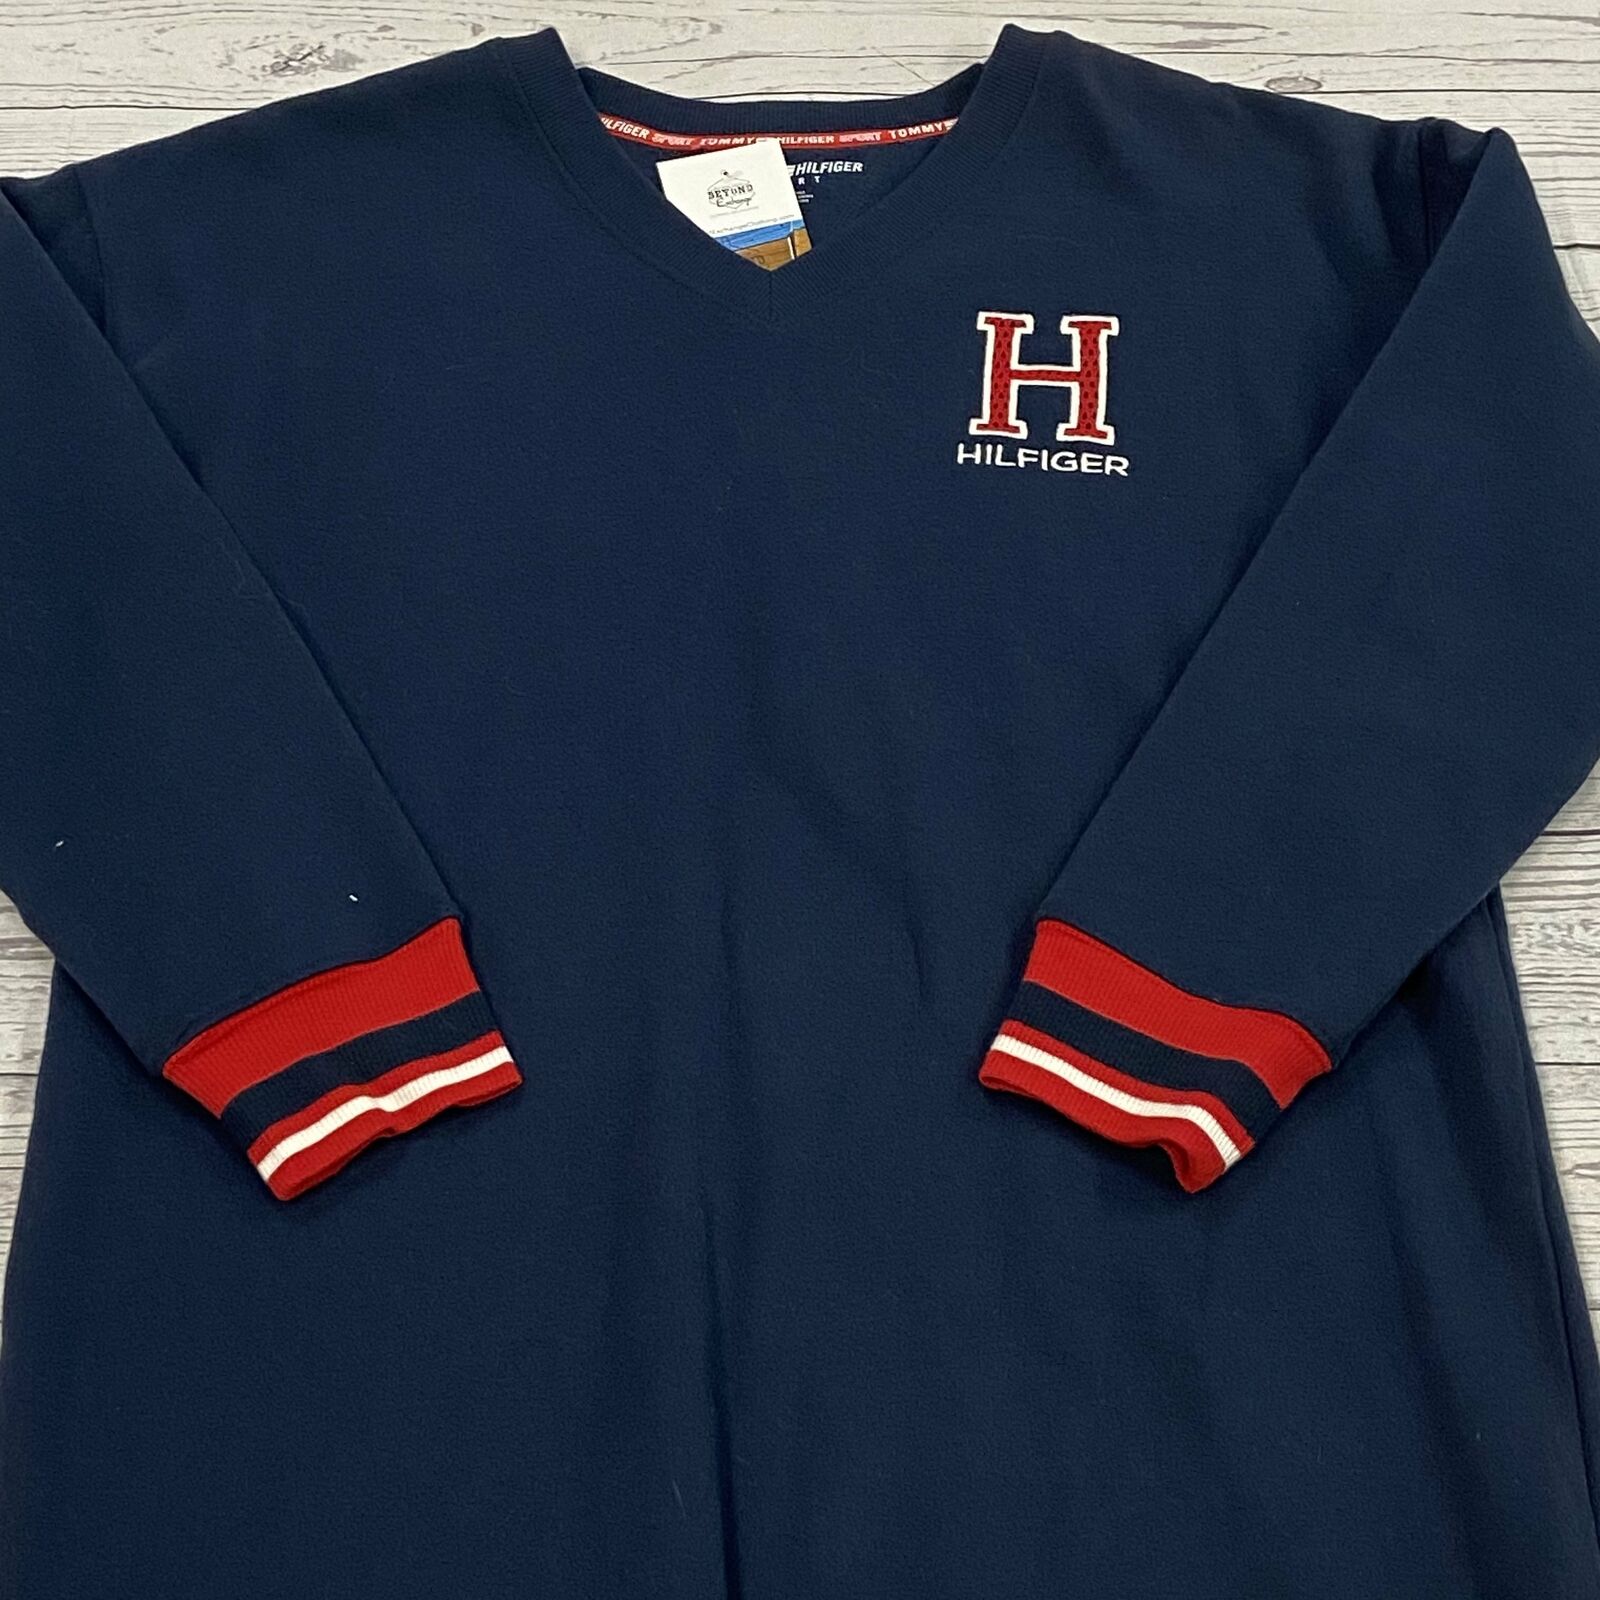 Tommy Hilfiger Sport Navy Sweater Dress Tunic Women\'s Size Medium - beyond  exchange